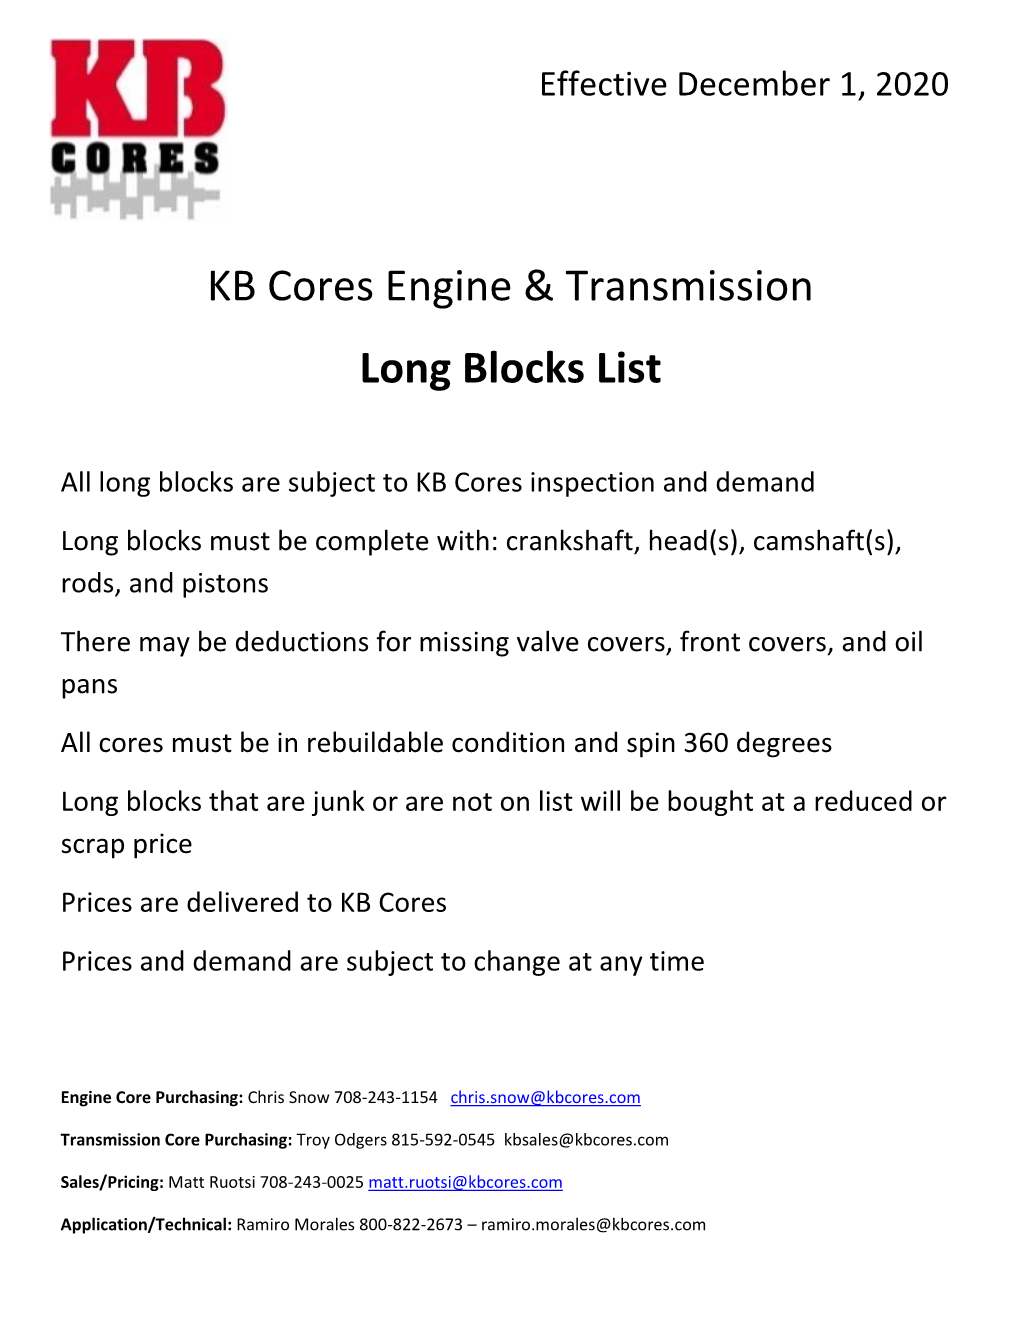 KB Cores Engine & Transmission Long Blocks List